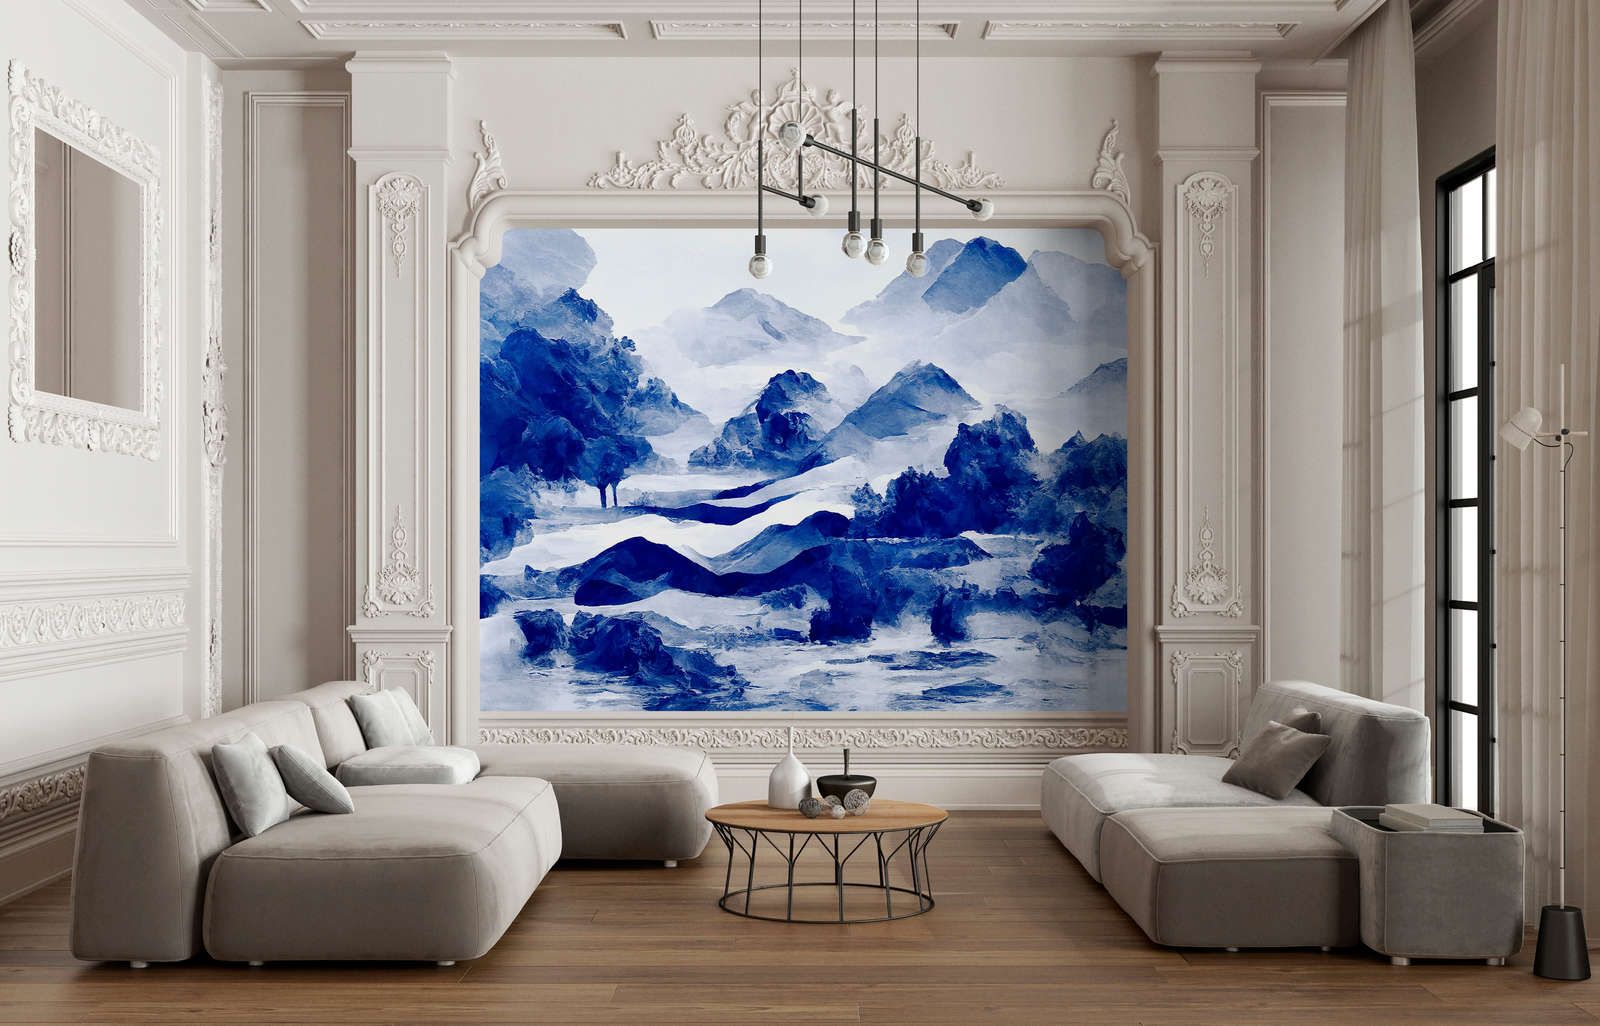             Photo wallpaper »tinterra 3« - Landscape with mountains & fog - Blue | Smooth, slightly shiny premium non-woven fabric
        